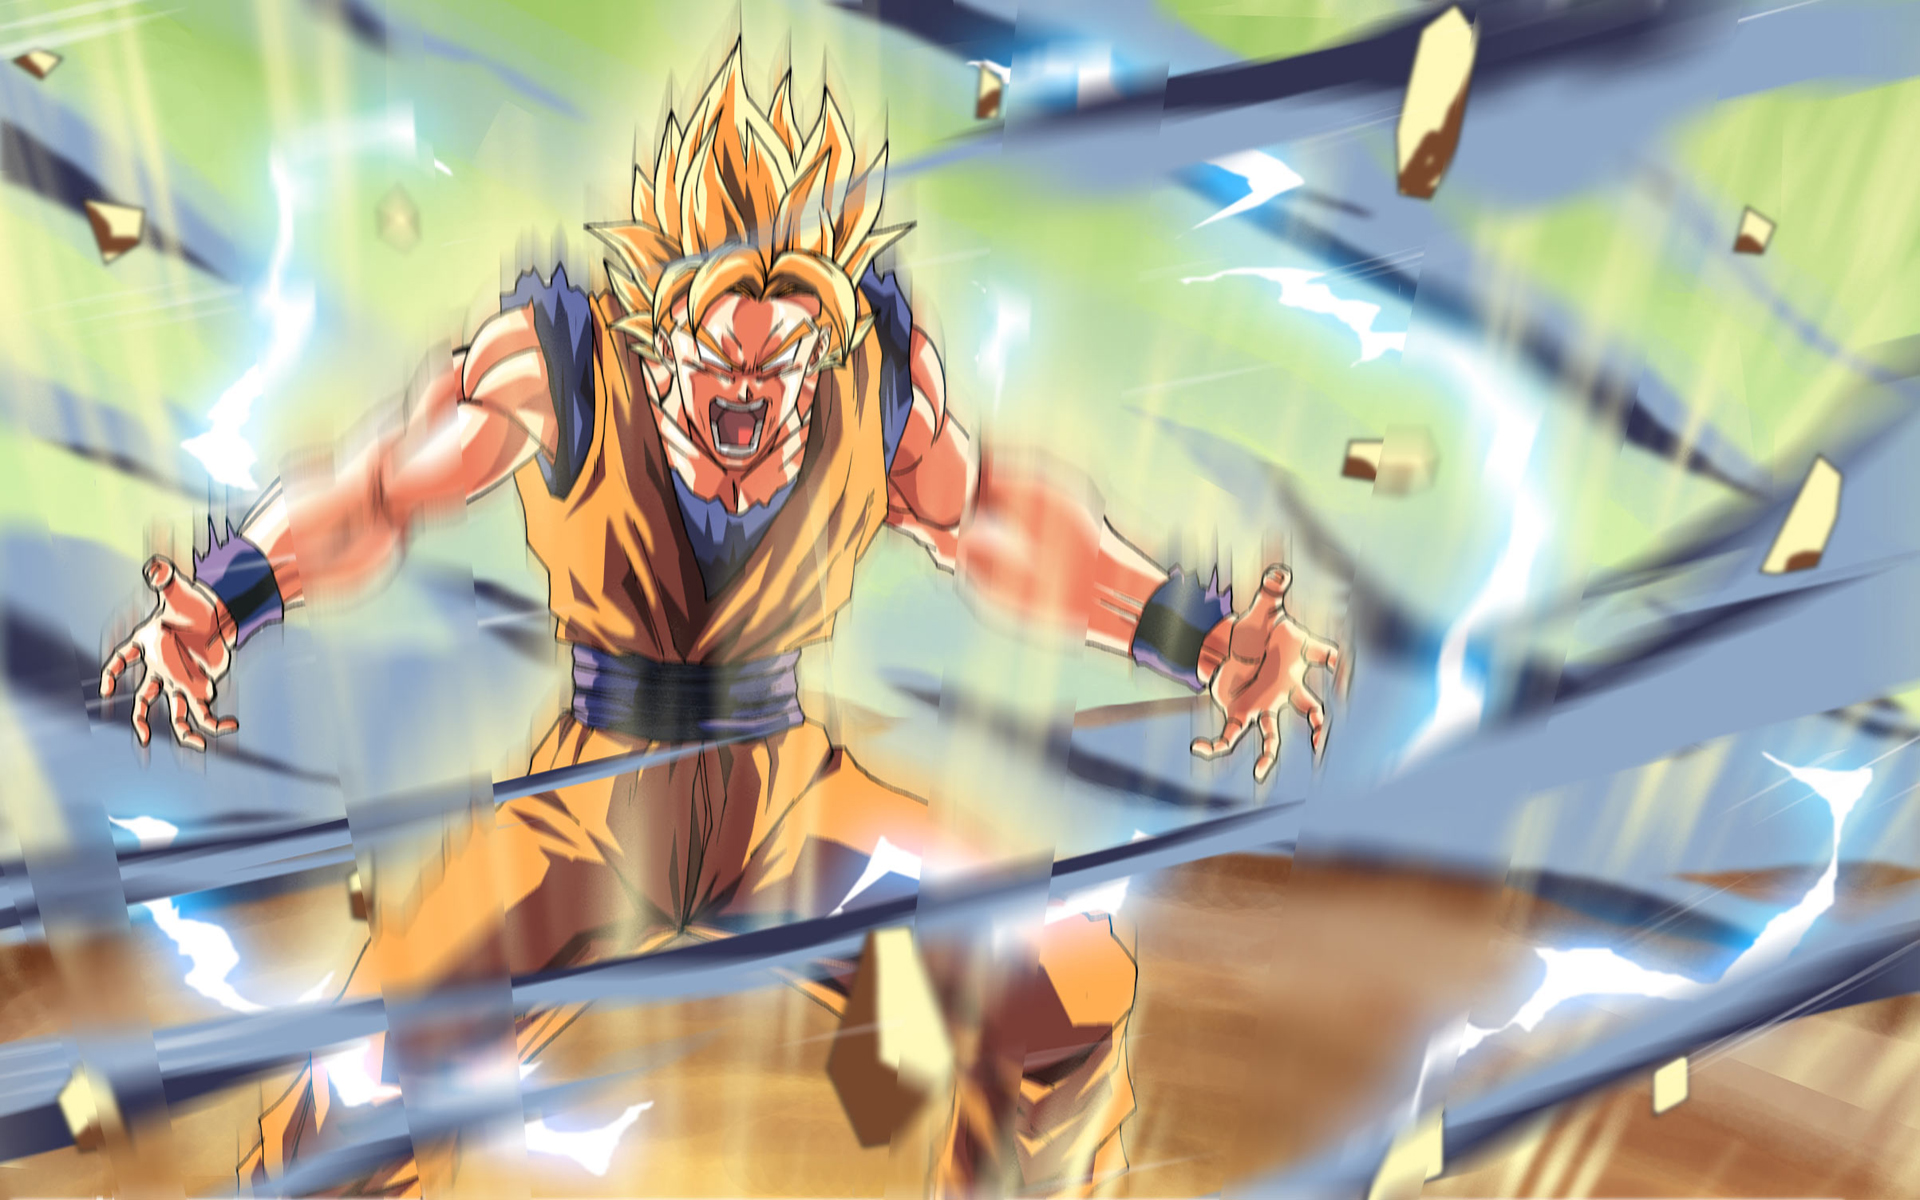 Powerful Goku showcasing Super Saiyan 2 transformation